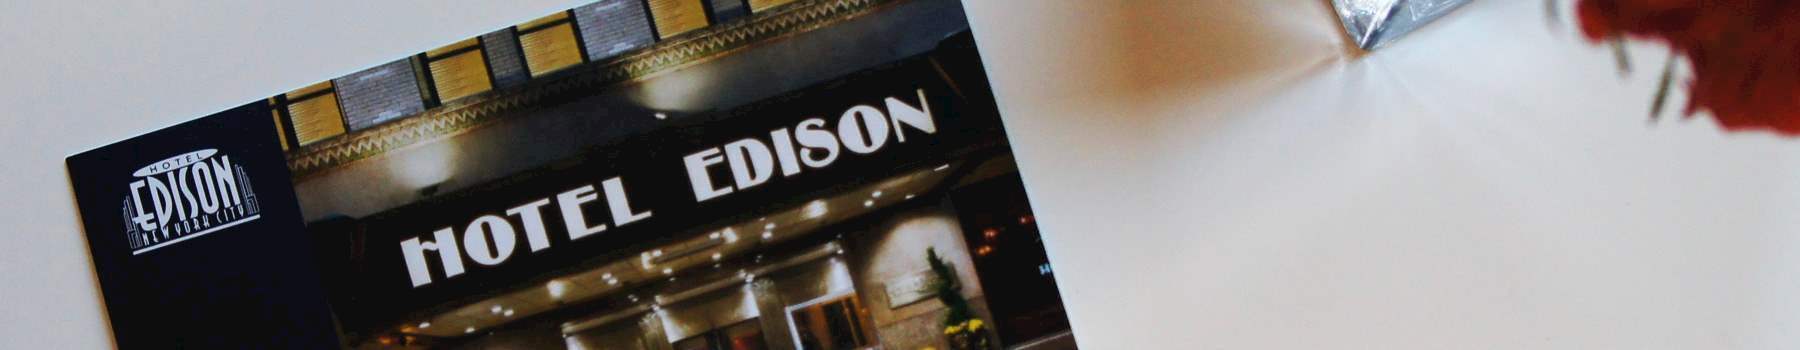 Email offer of Hotel Edison Newyork